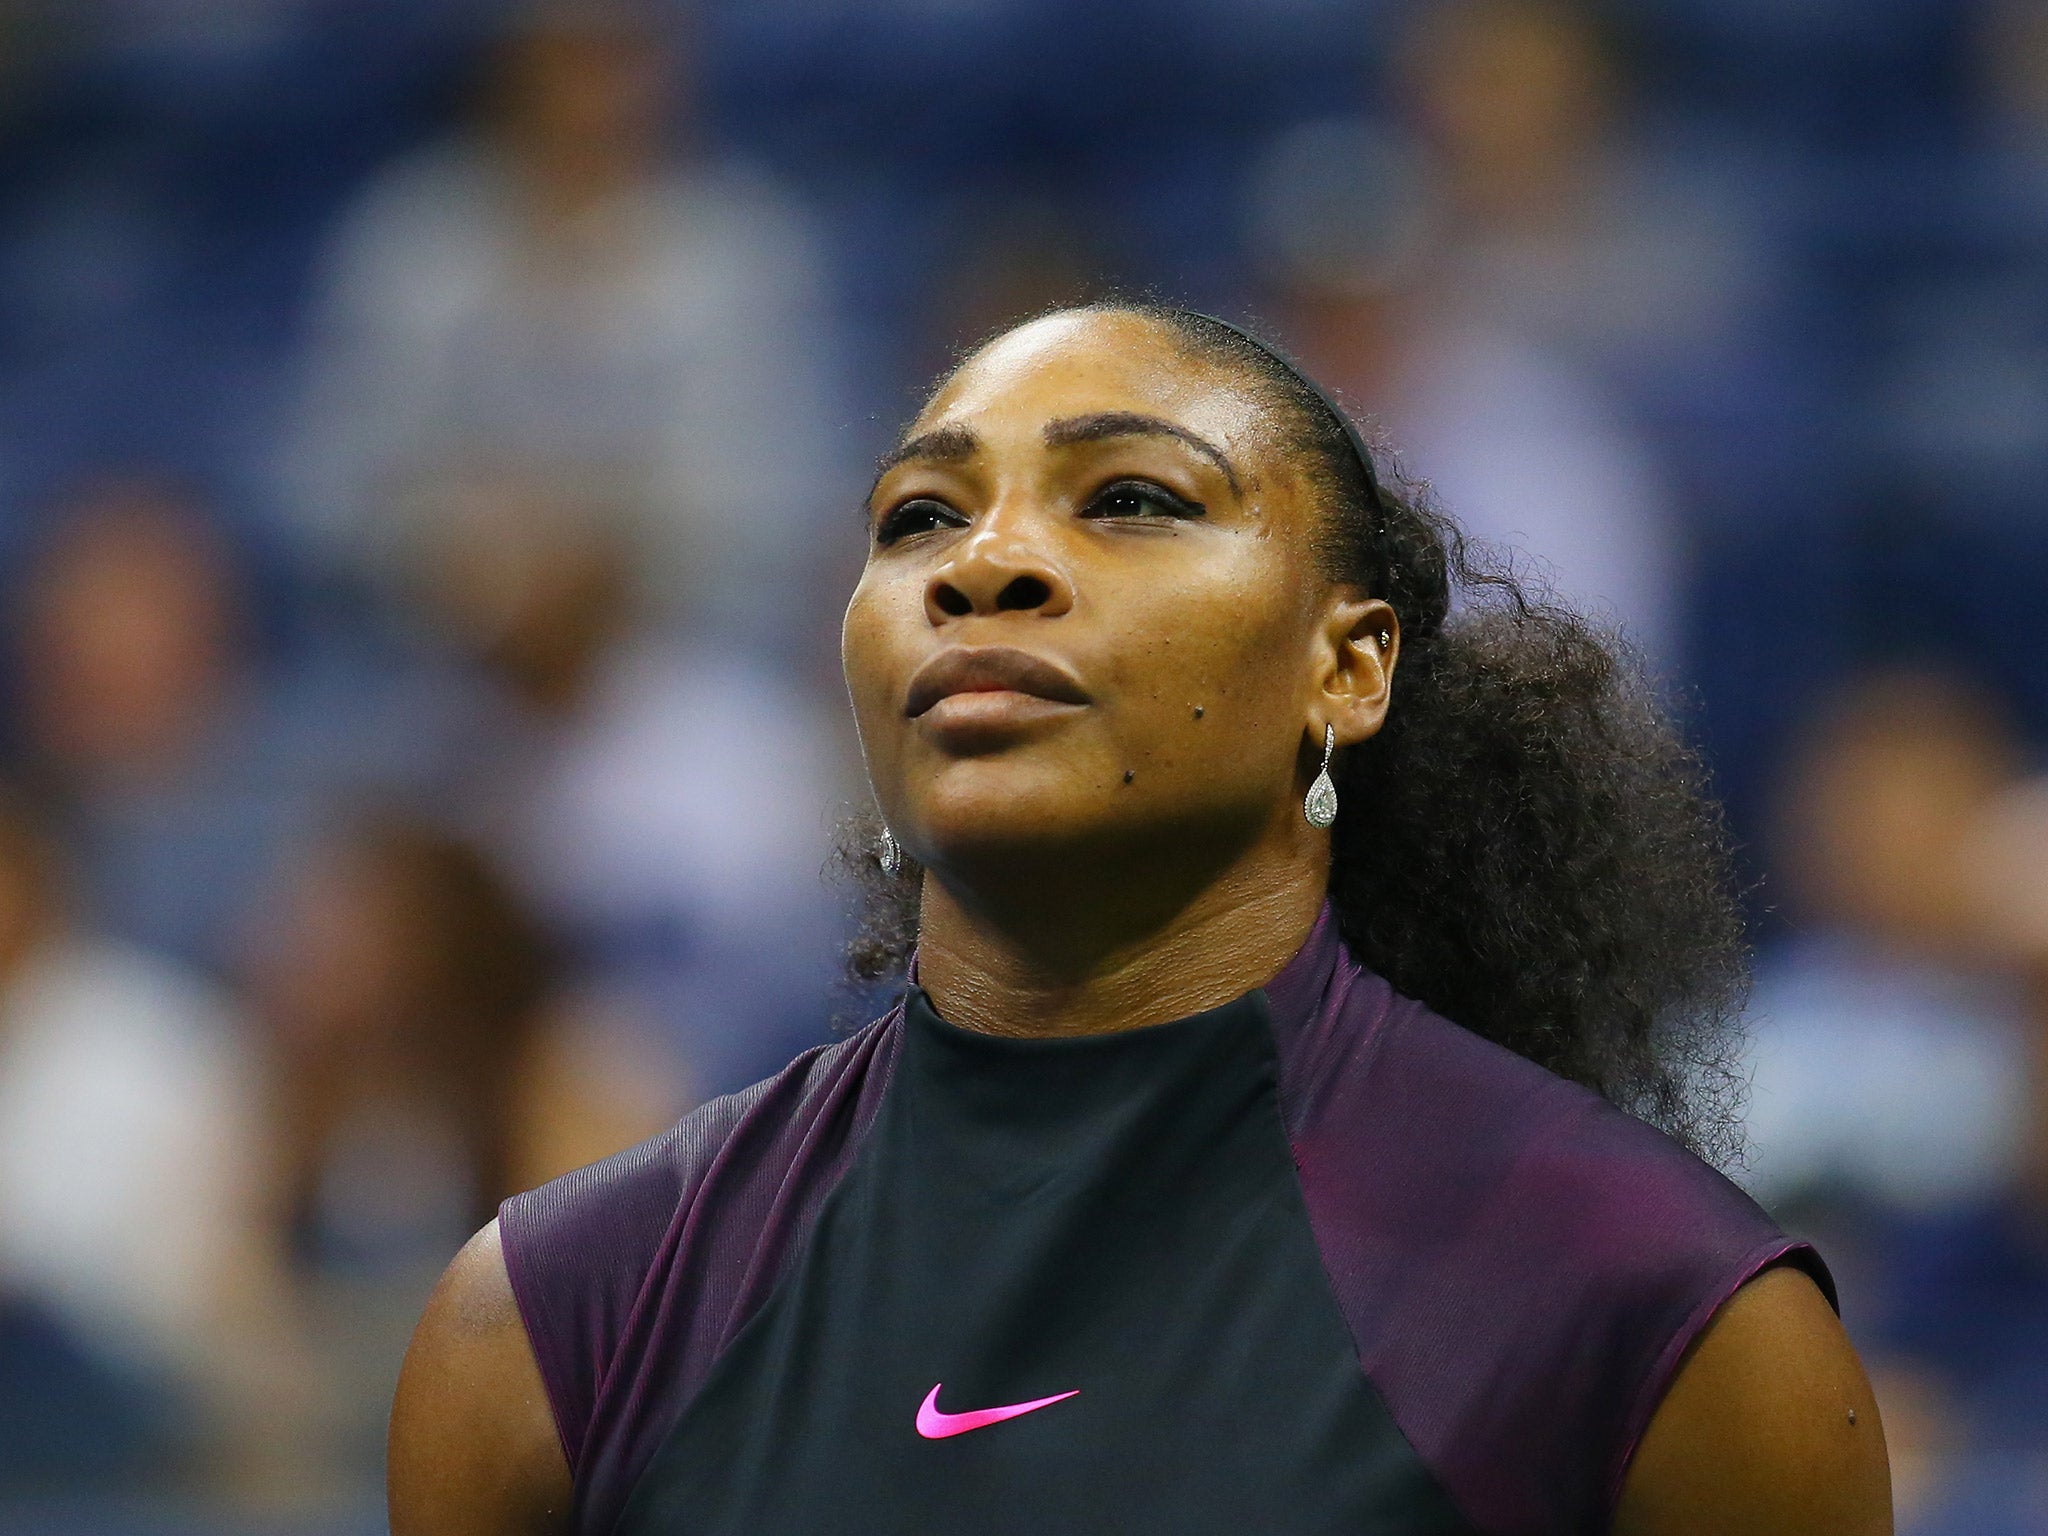 Serena Williams suffered a 6-2, 7-5 defeat by Karolina Pliskova in the US Open semi-finals